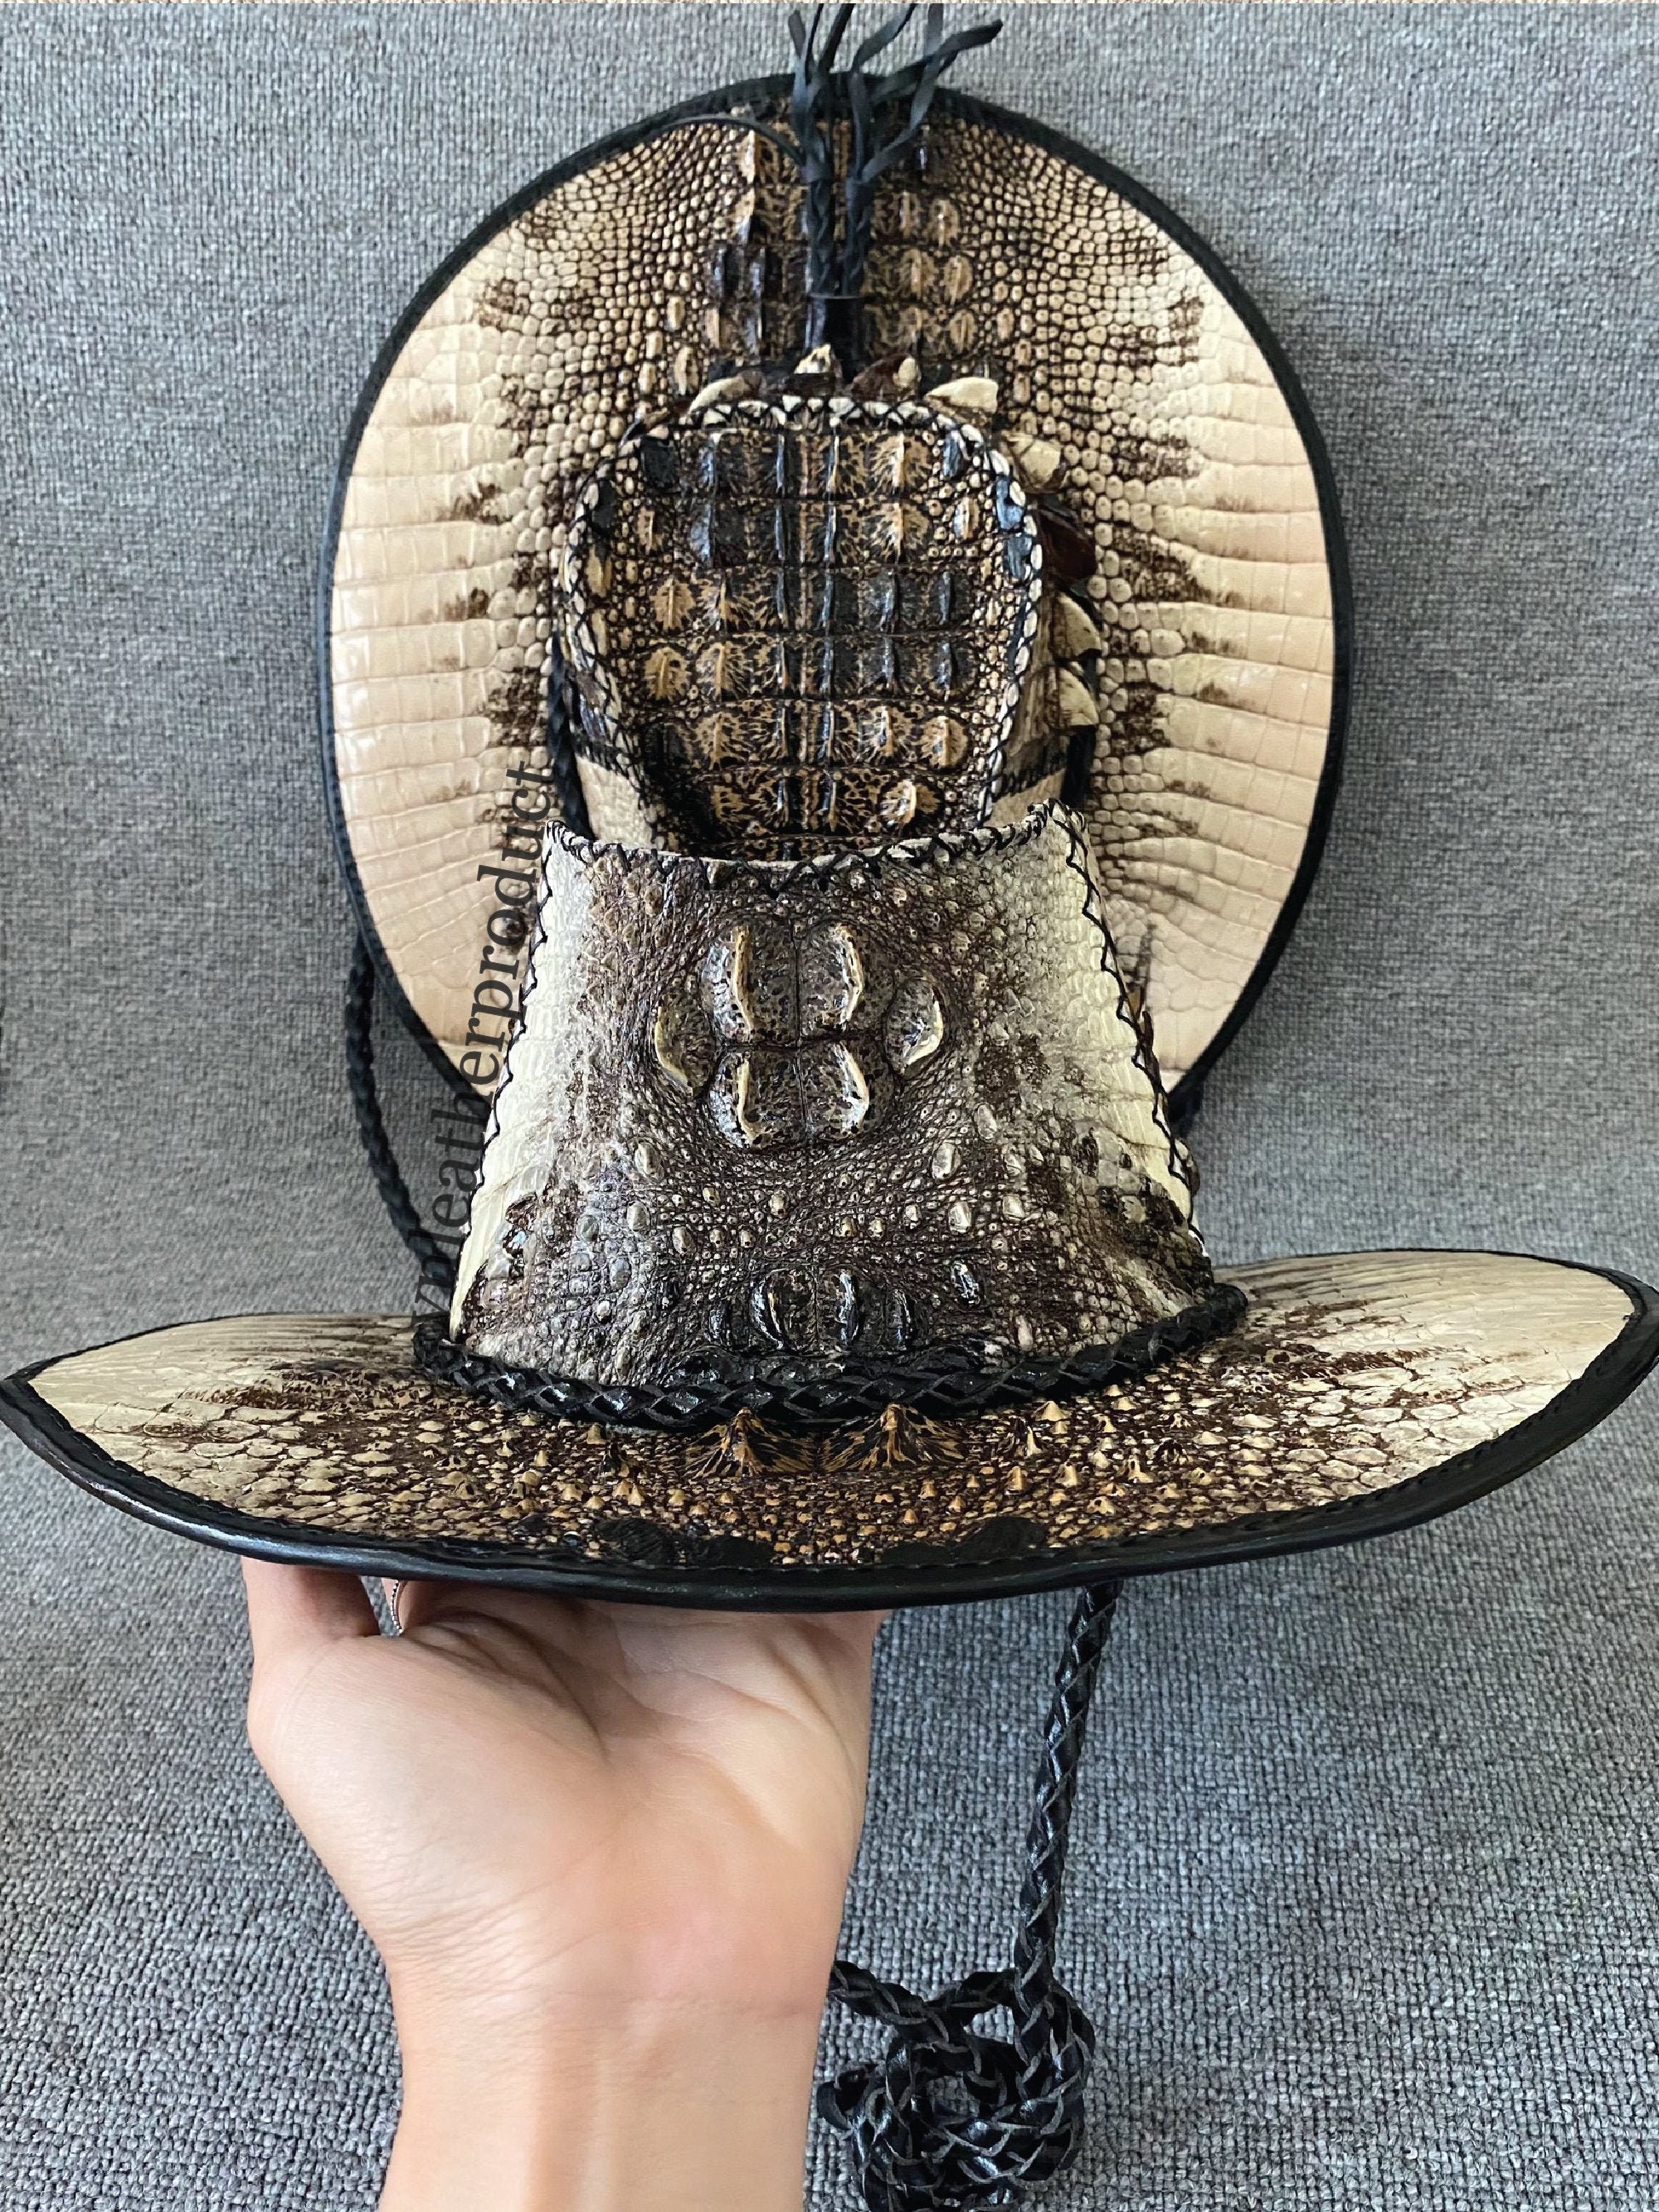 Alligator leather skin cowboy hats for men cowboy stylish | Etsy